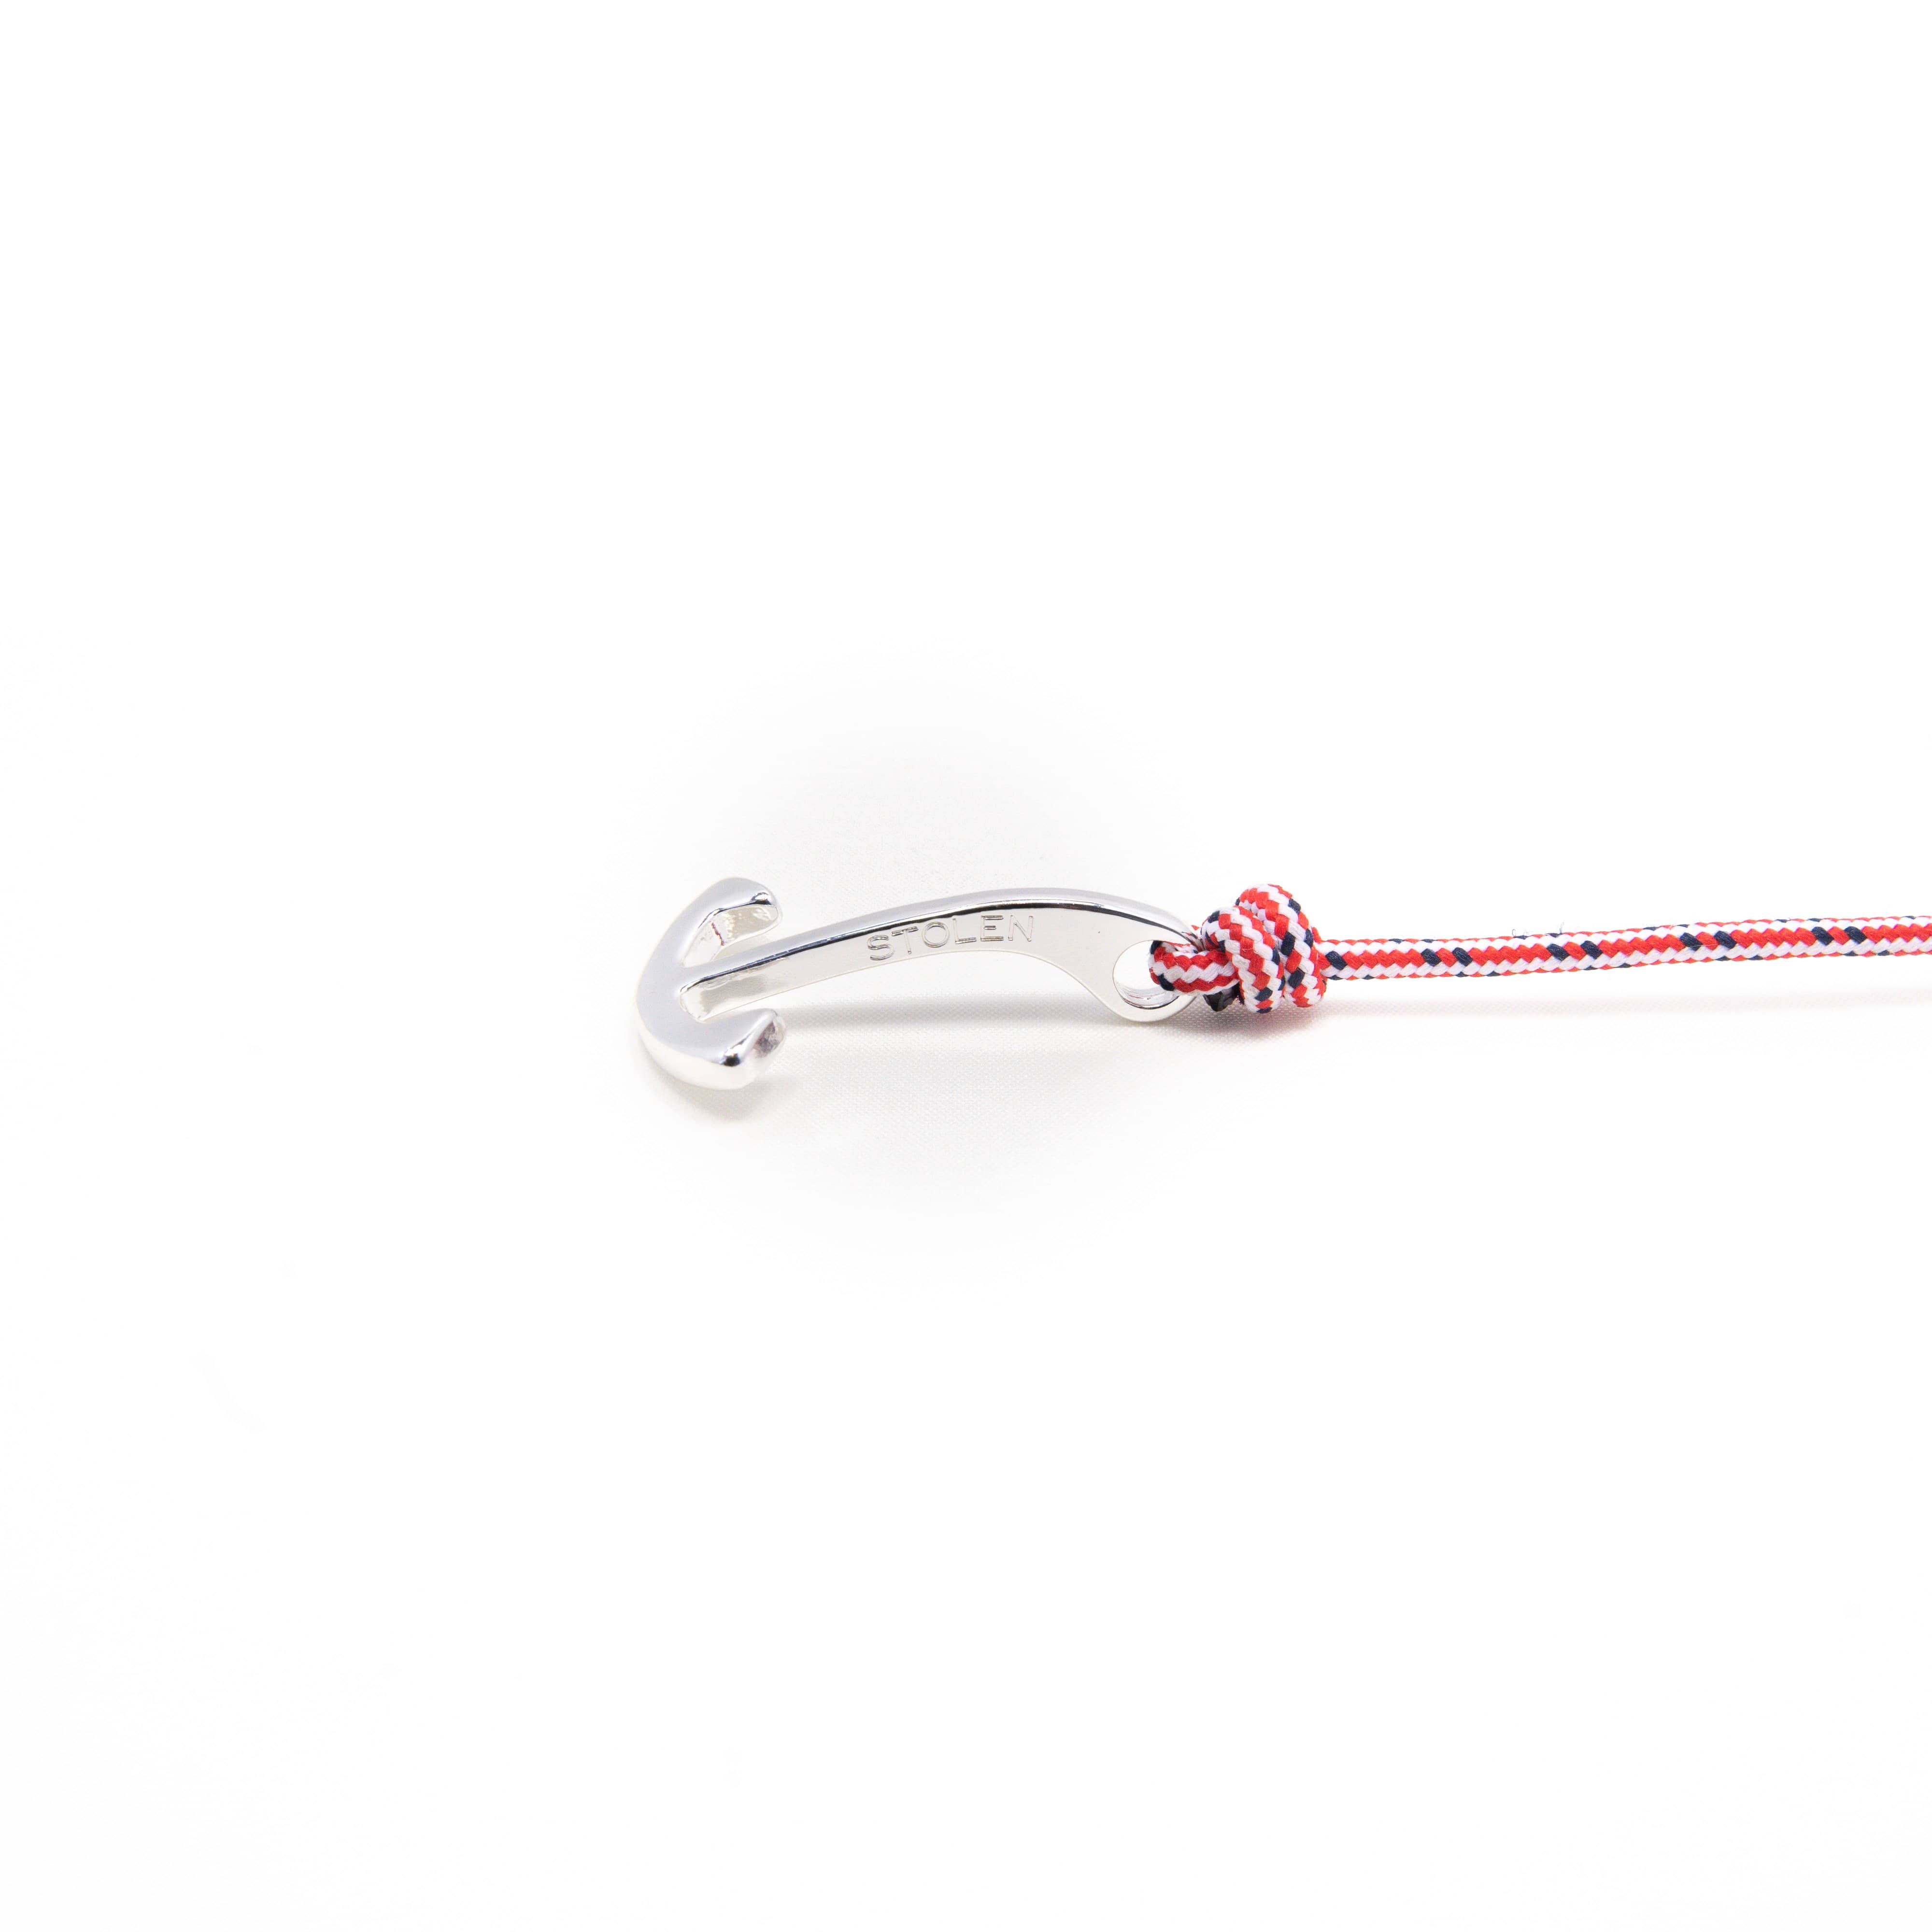 Adjustable anchor bracelet, silver-Wrist Wear-Stolen Riches / CA